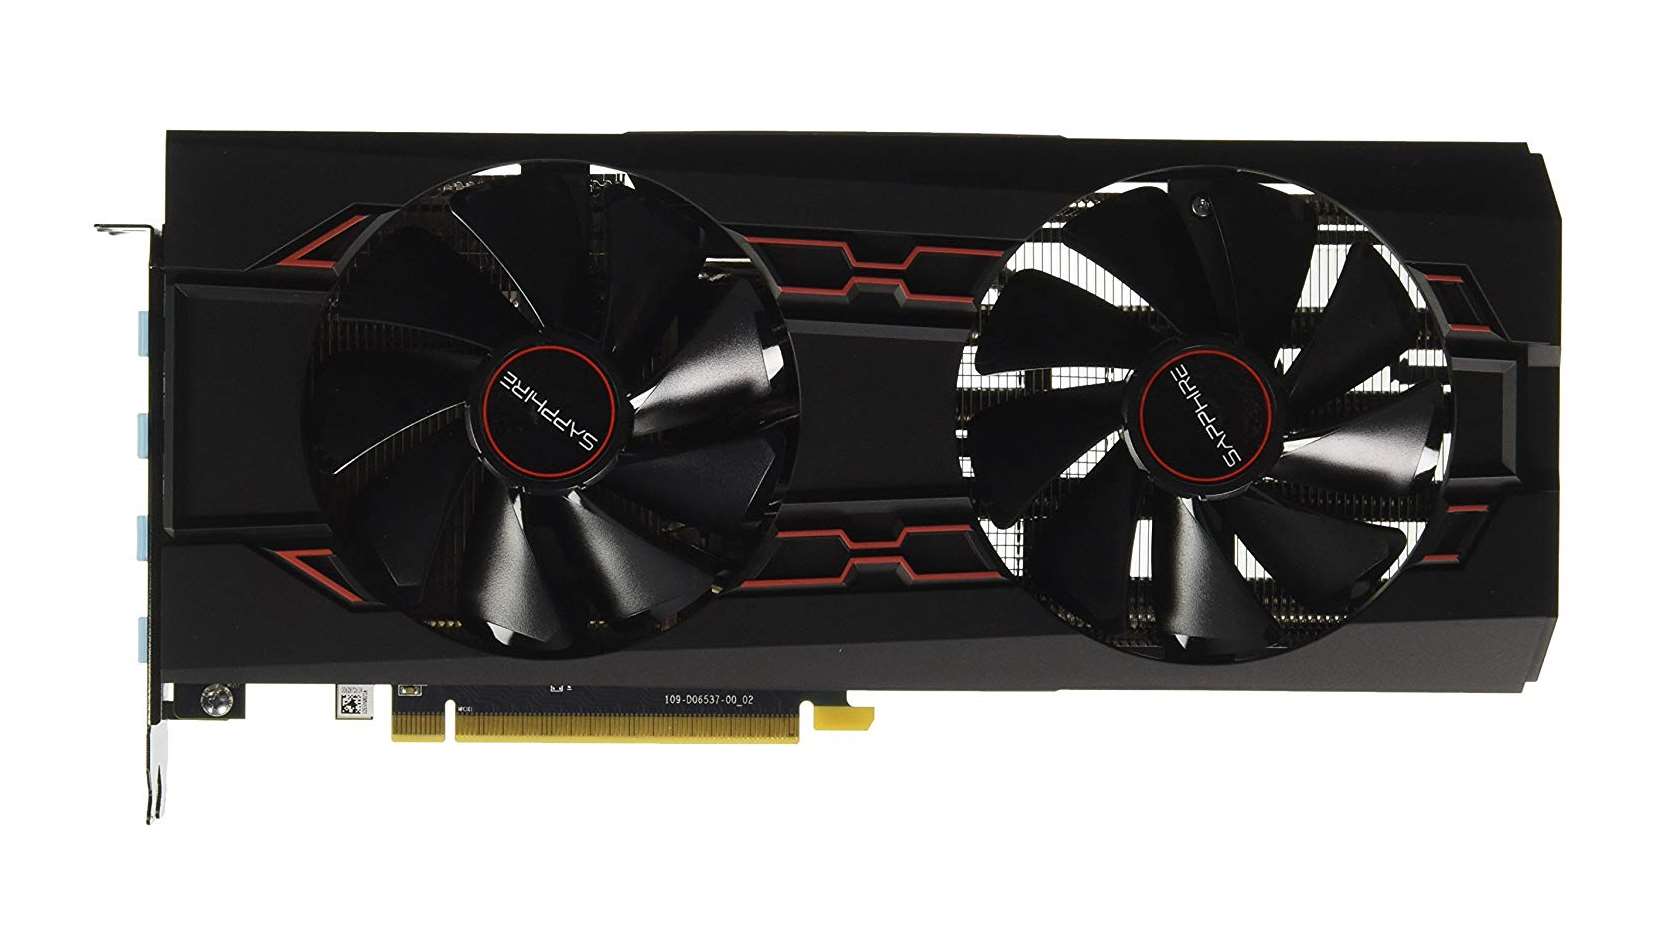 Sapphire's AMD RX Vega price cut was an error, RTX 2060 remains | PCGamesN